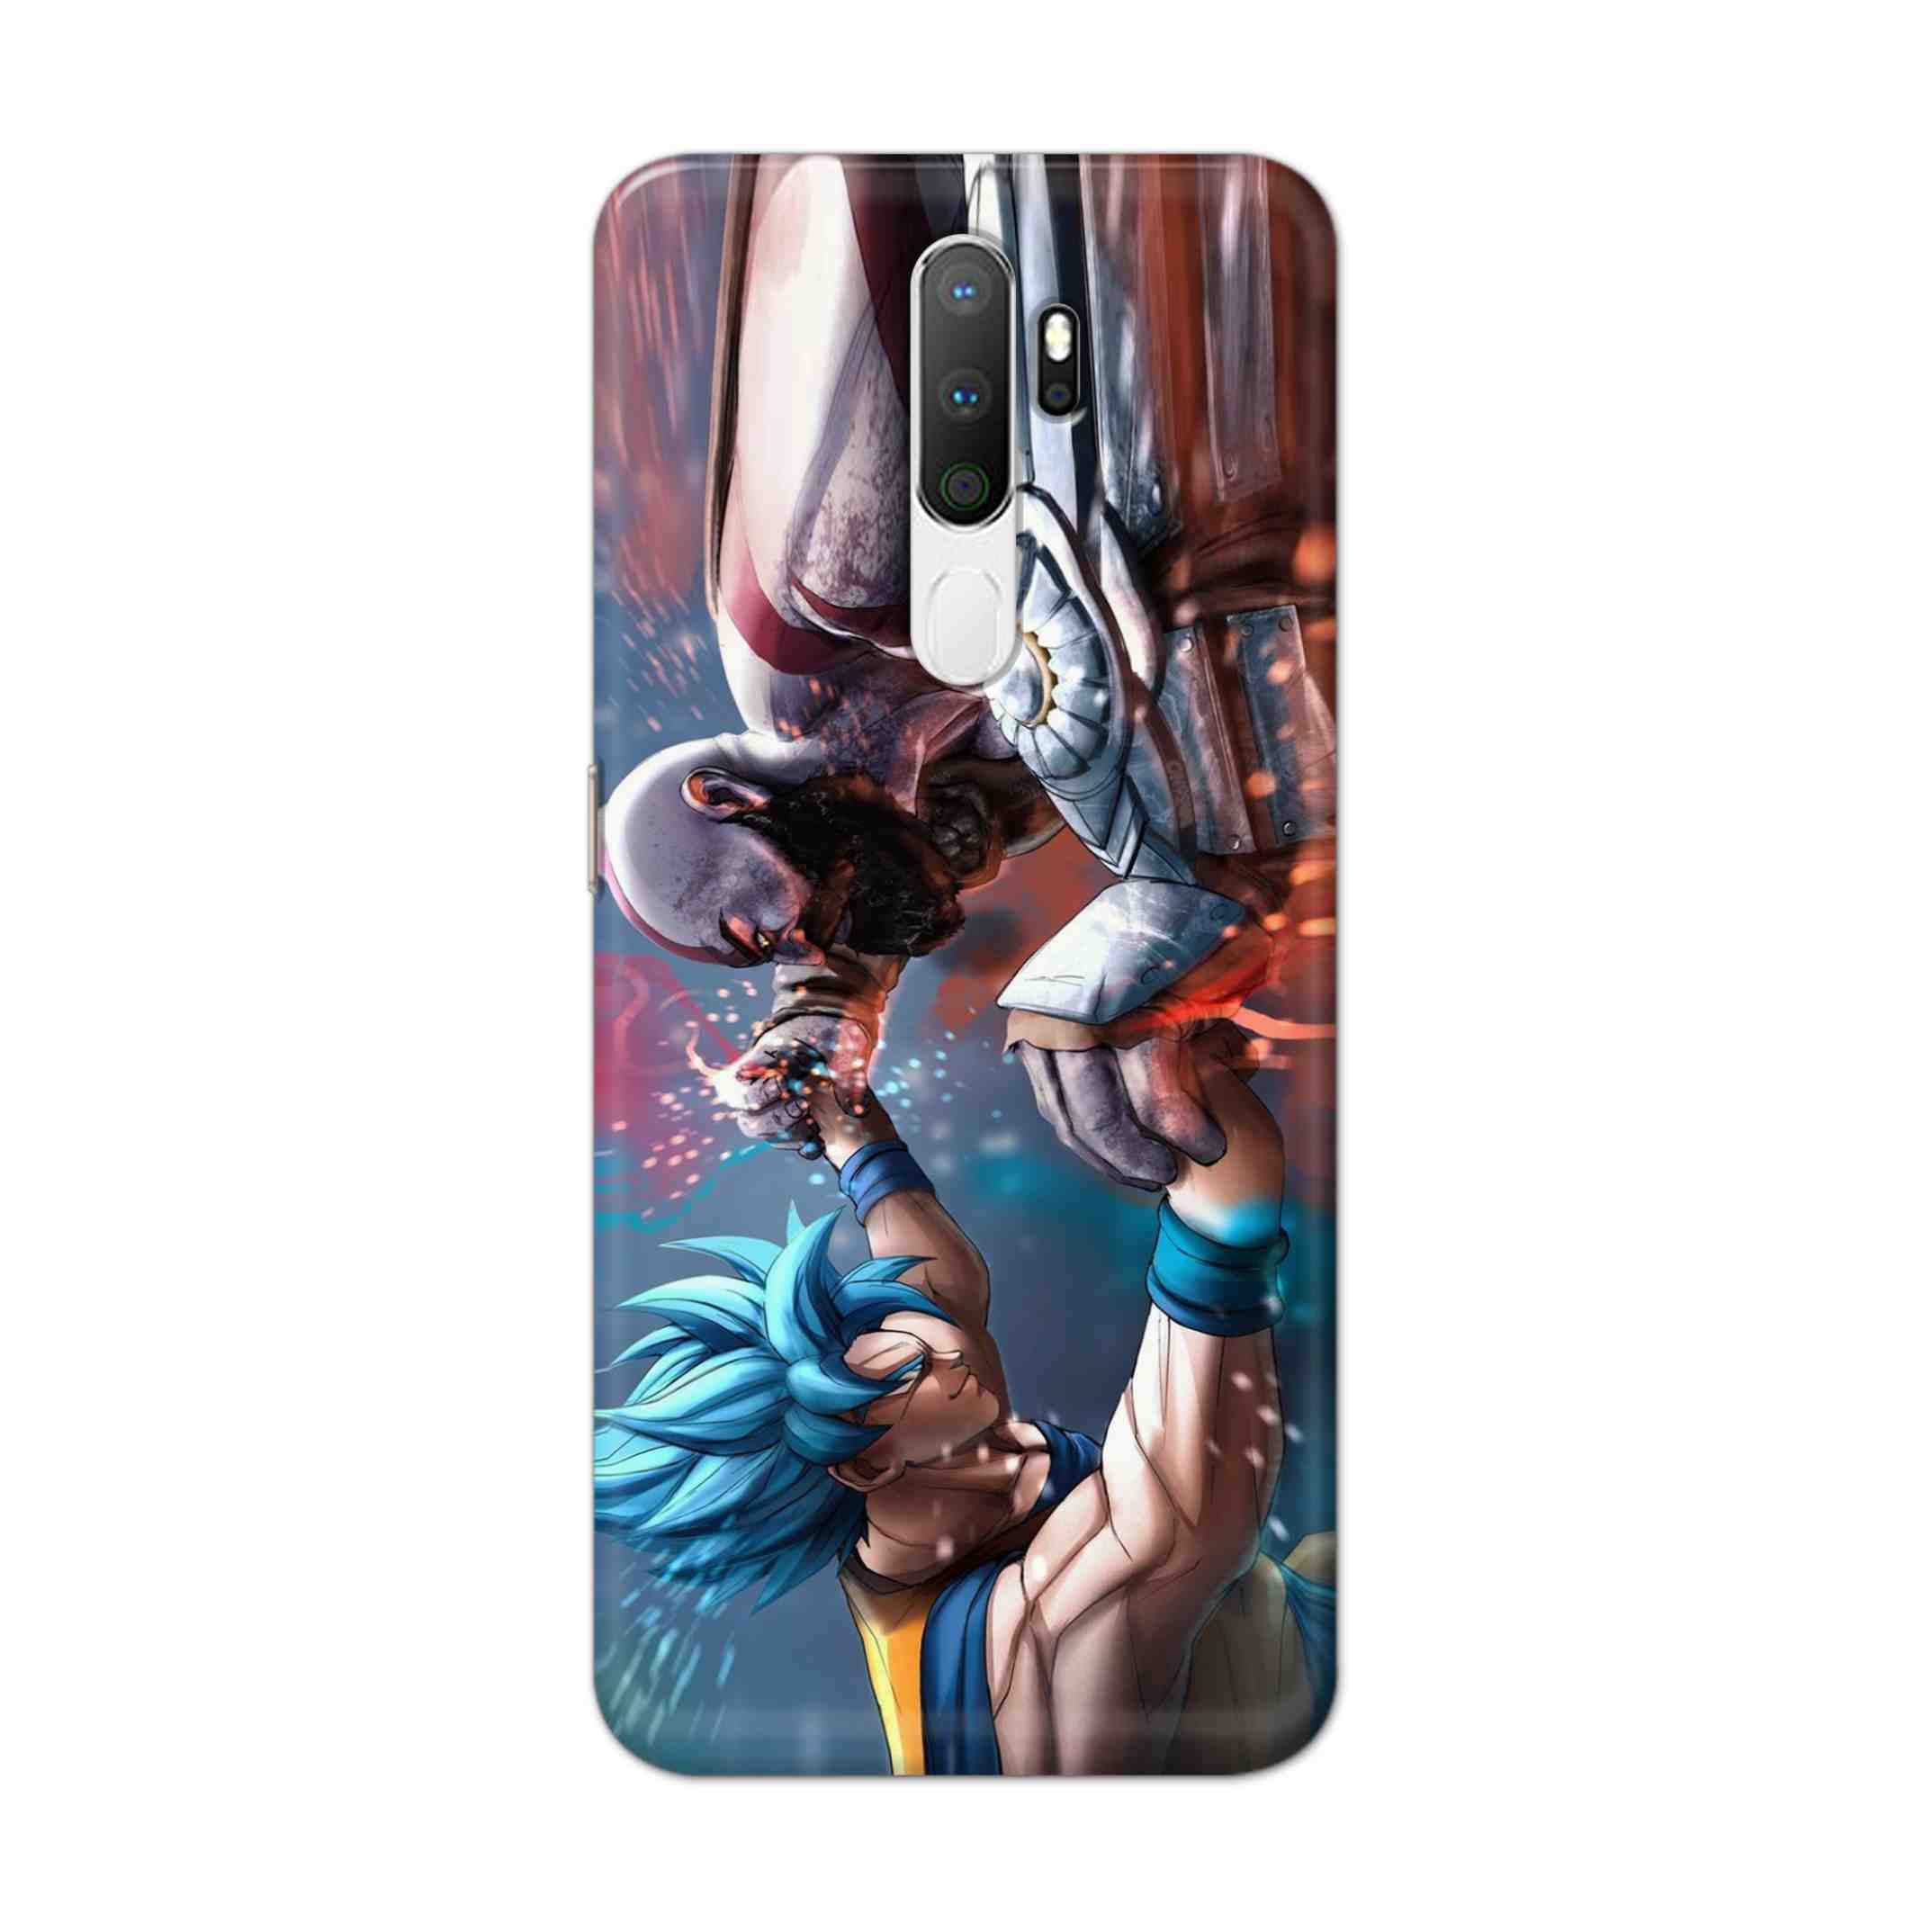 Buy Goku Vs Kratos Hard Back Mobile Phone Case Cover For Oppo A5 (2020) Online